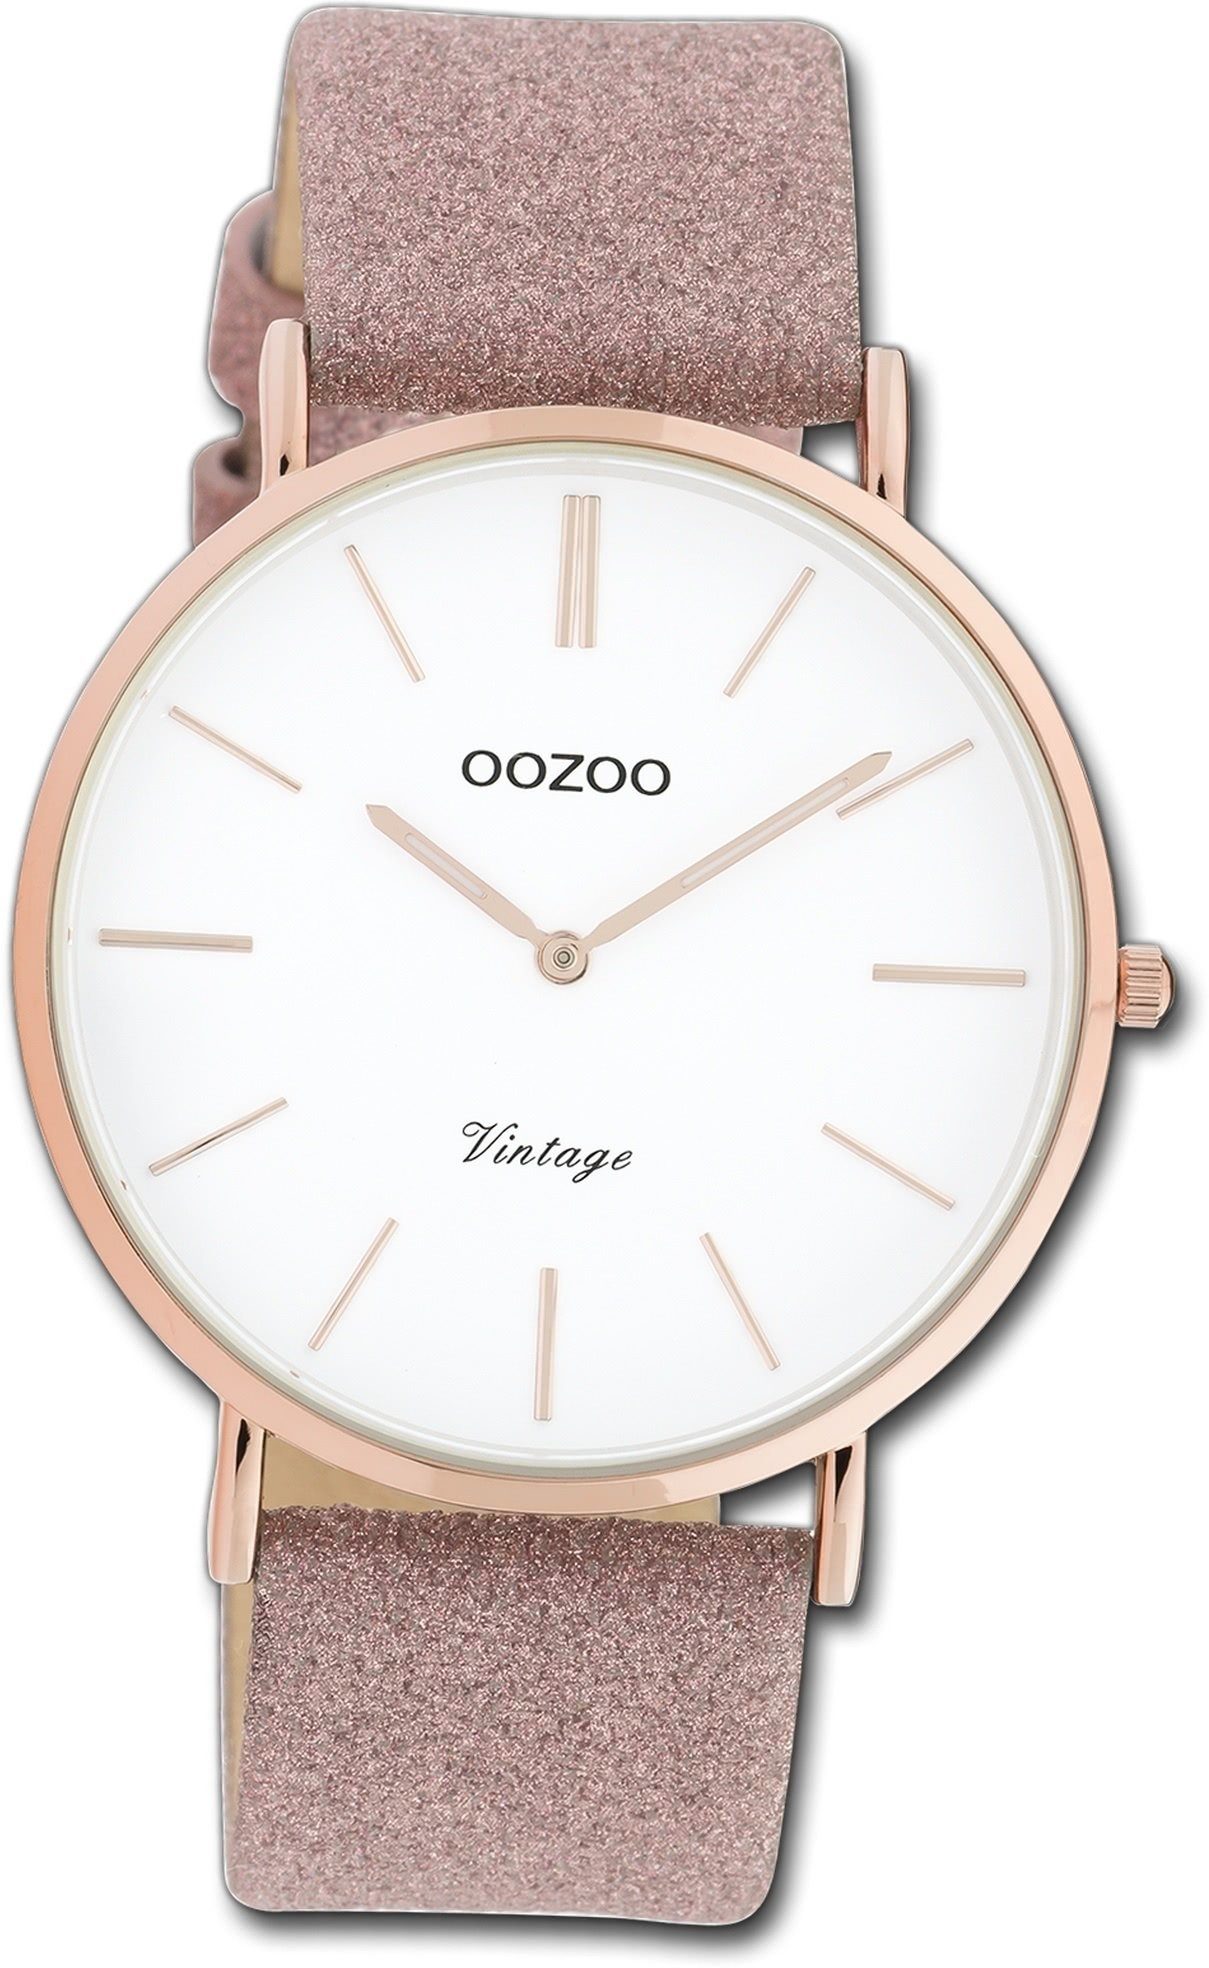 Quarzuhr (ca. Damen Gehäuse, Damenuhr Lederarmband Slim, groß OOZOO rosa, Ultra 40mm) Oozoo Armbanduhr rundes